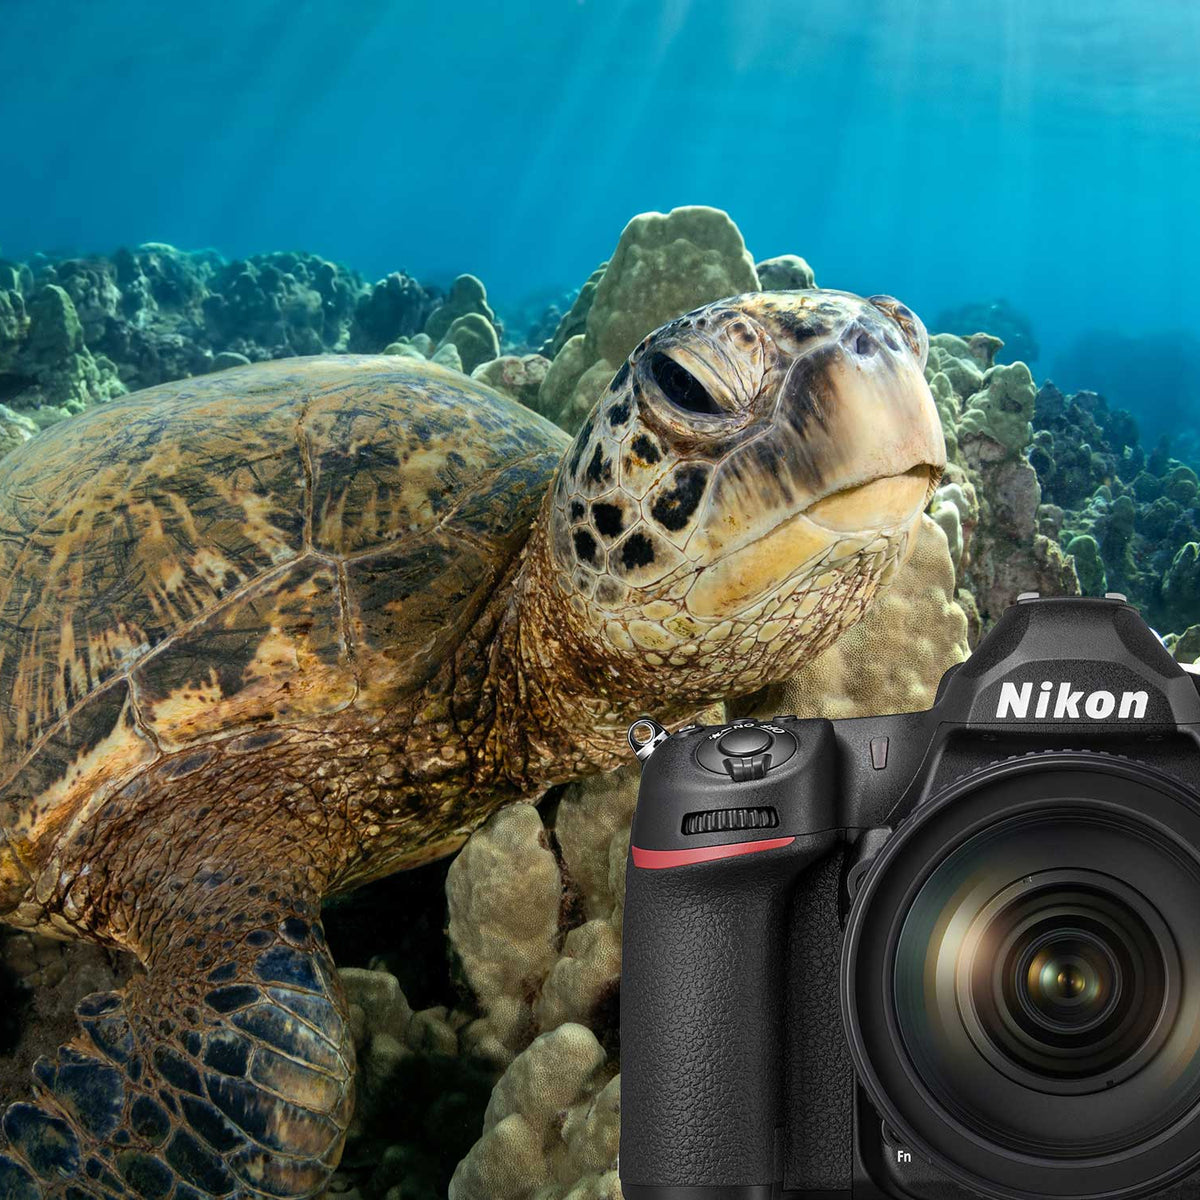 Nikon D780 Underwater Photos